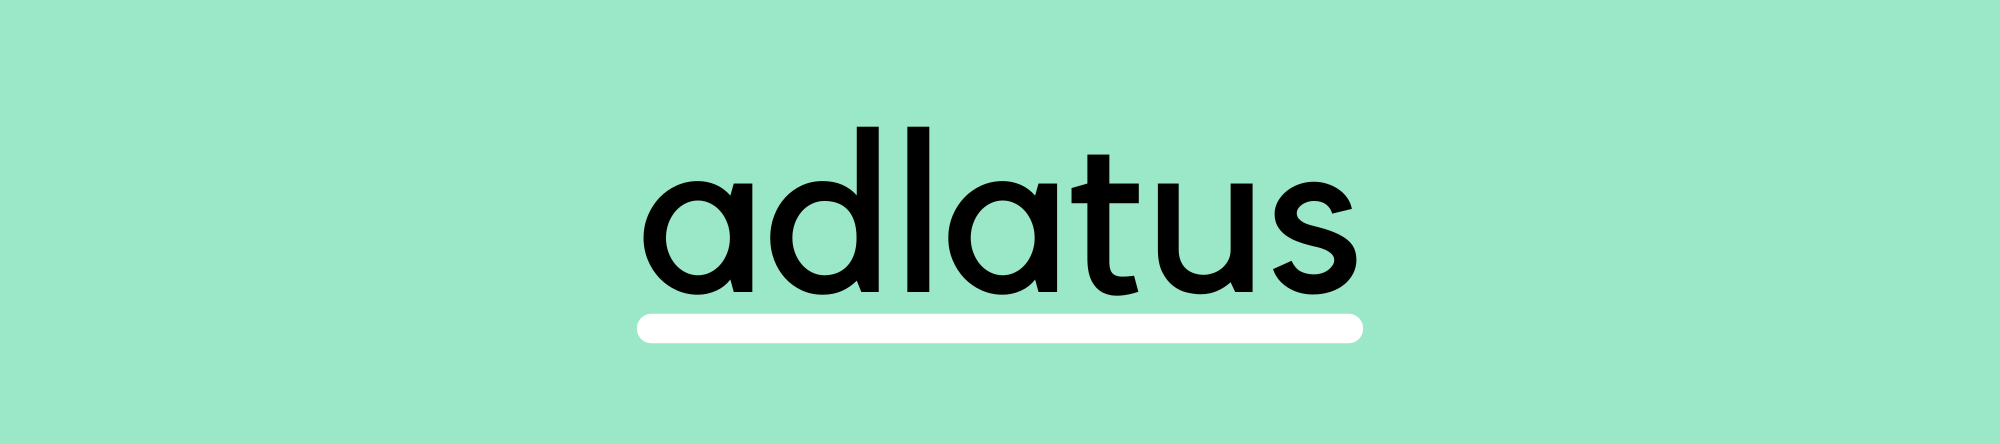 Adlatus - Tippspiel 216x48 (216 × 48 mm)